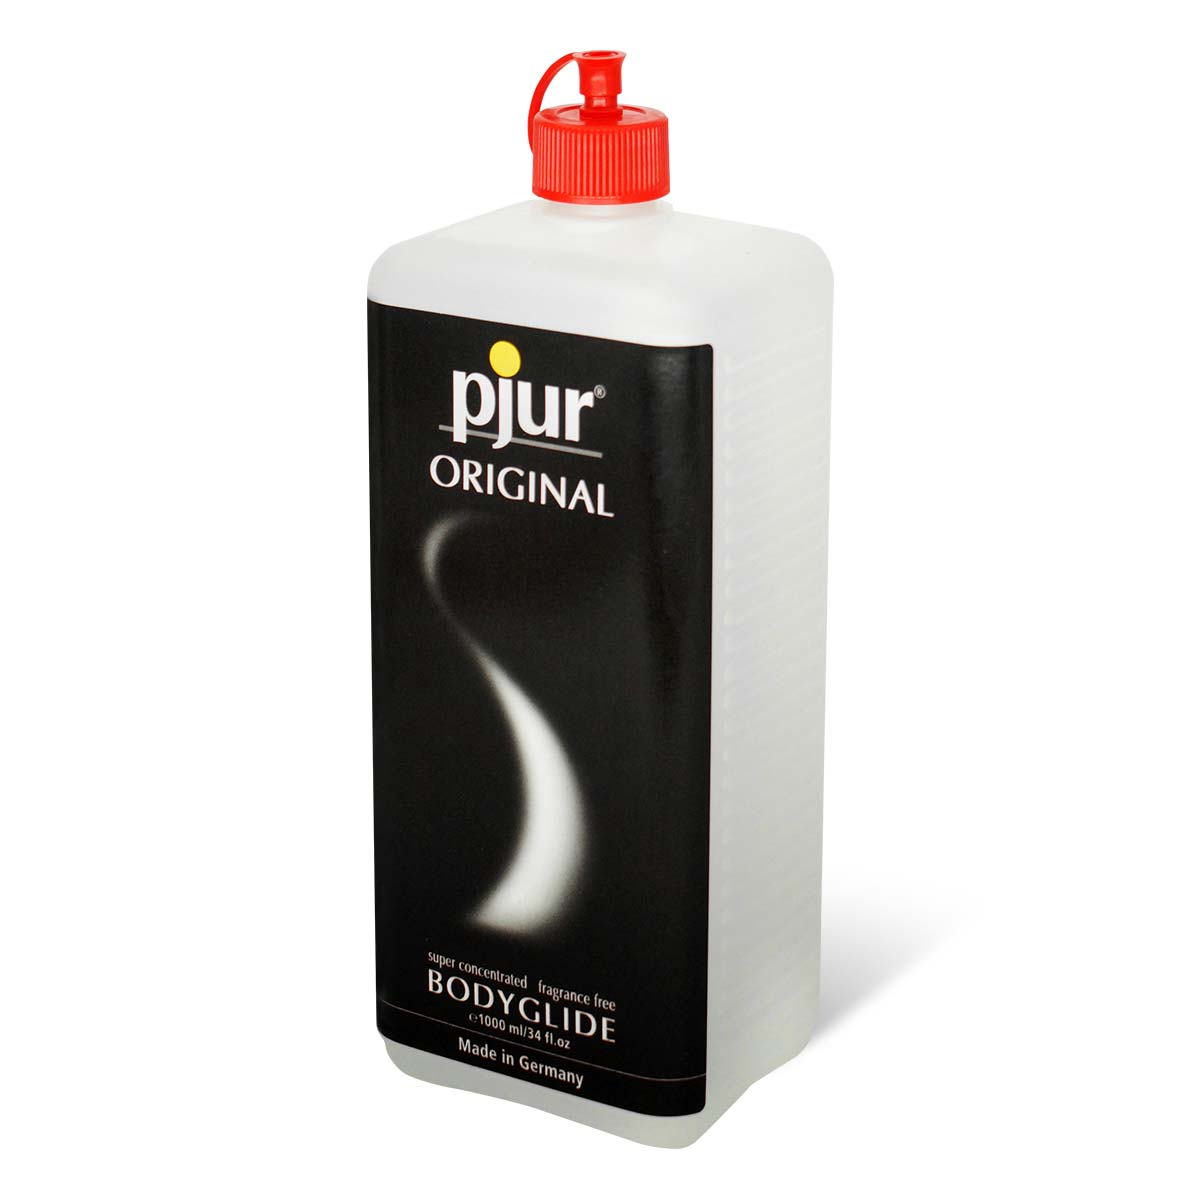 pjur ORIGINAL 1000ml Silicone-based Lubricant - International Edition-p_1